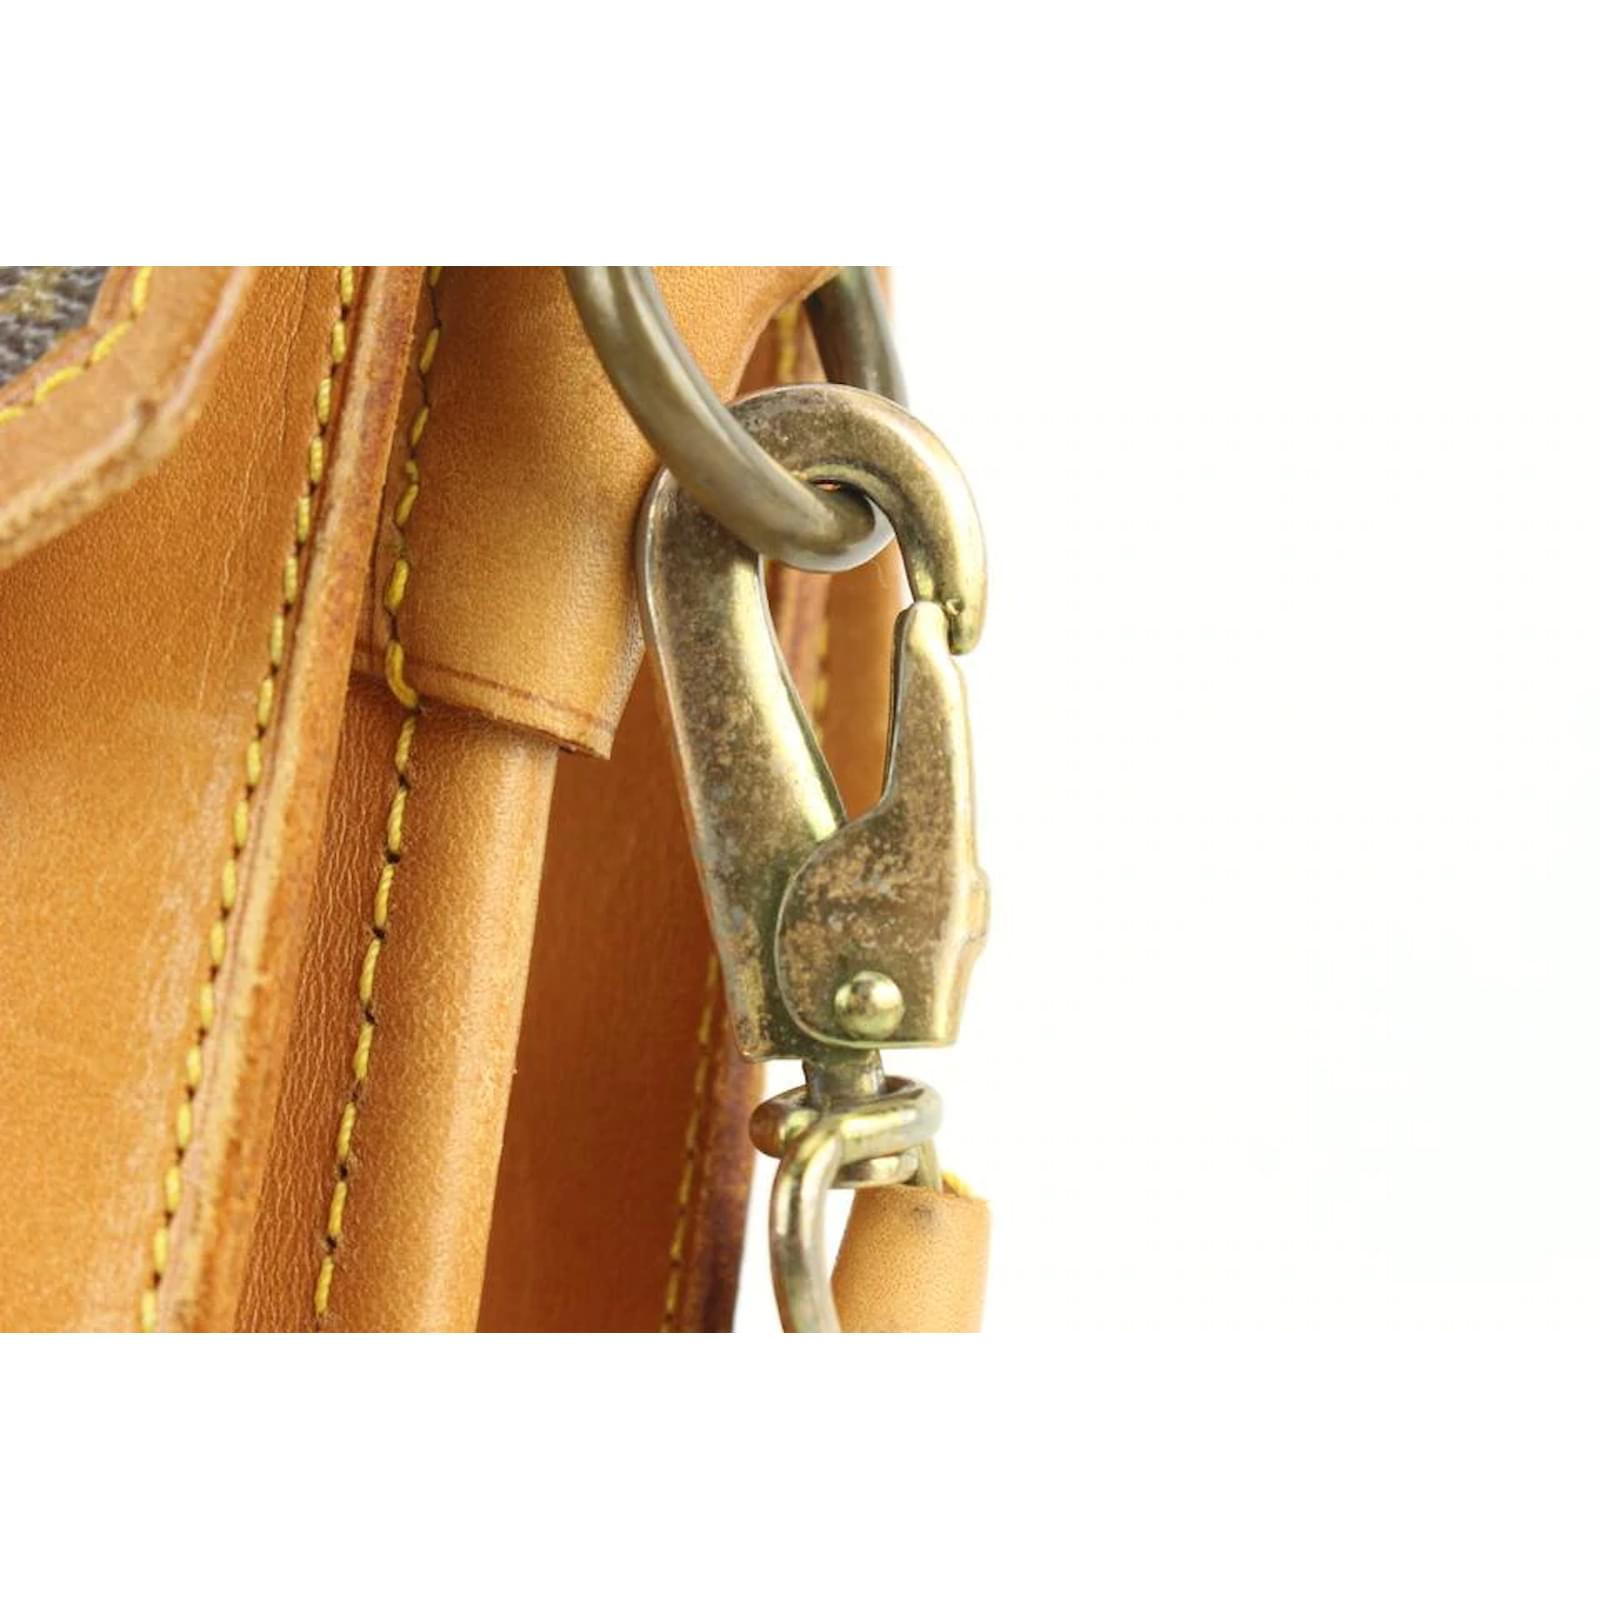 Louis Vuitton Monogram Sac Biface Crossbody Flap Bag